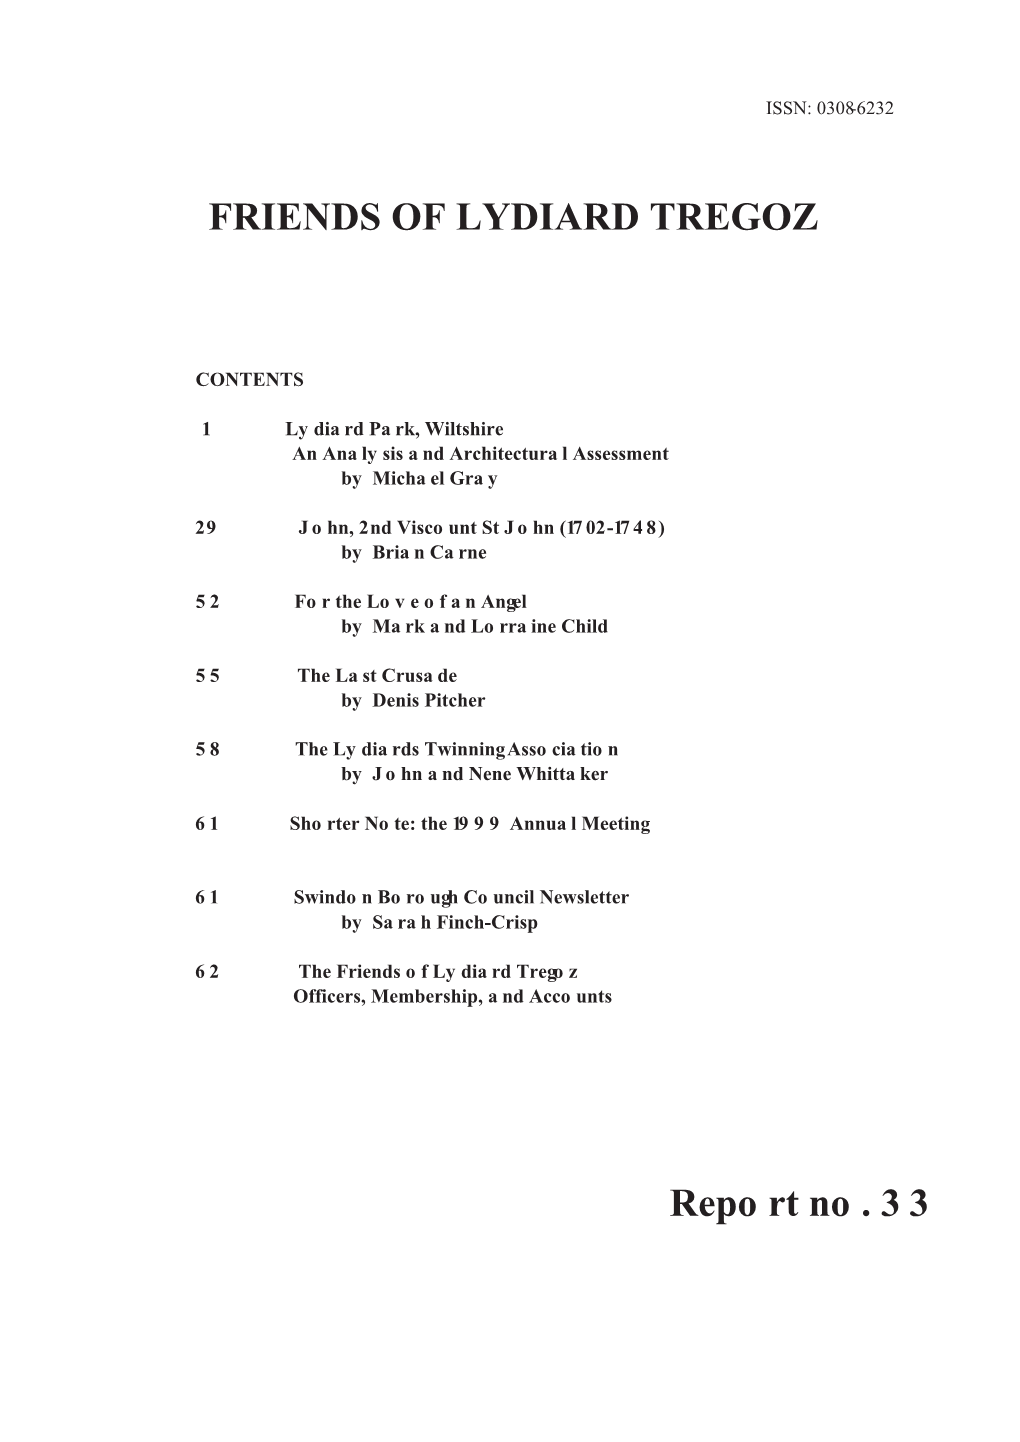 FRIENDS of LYDIARD TREGOZ Report No. 33